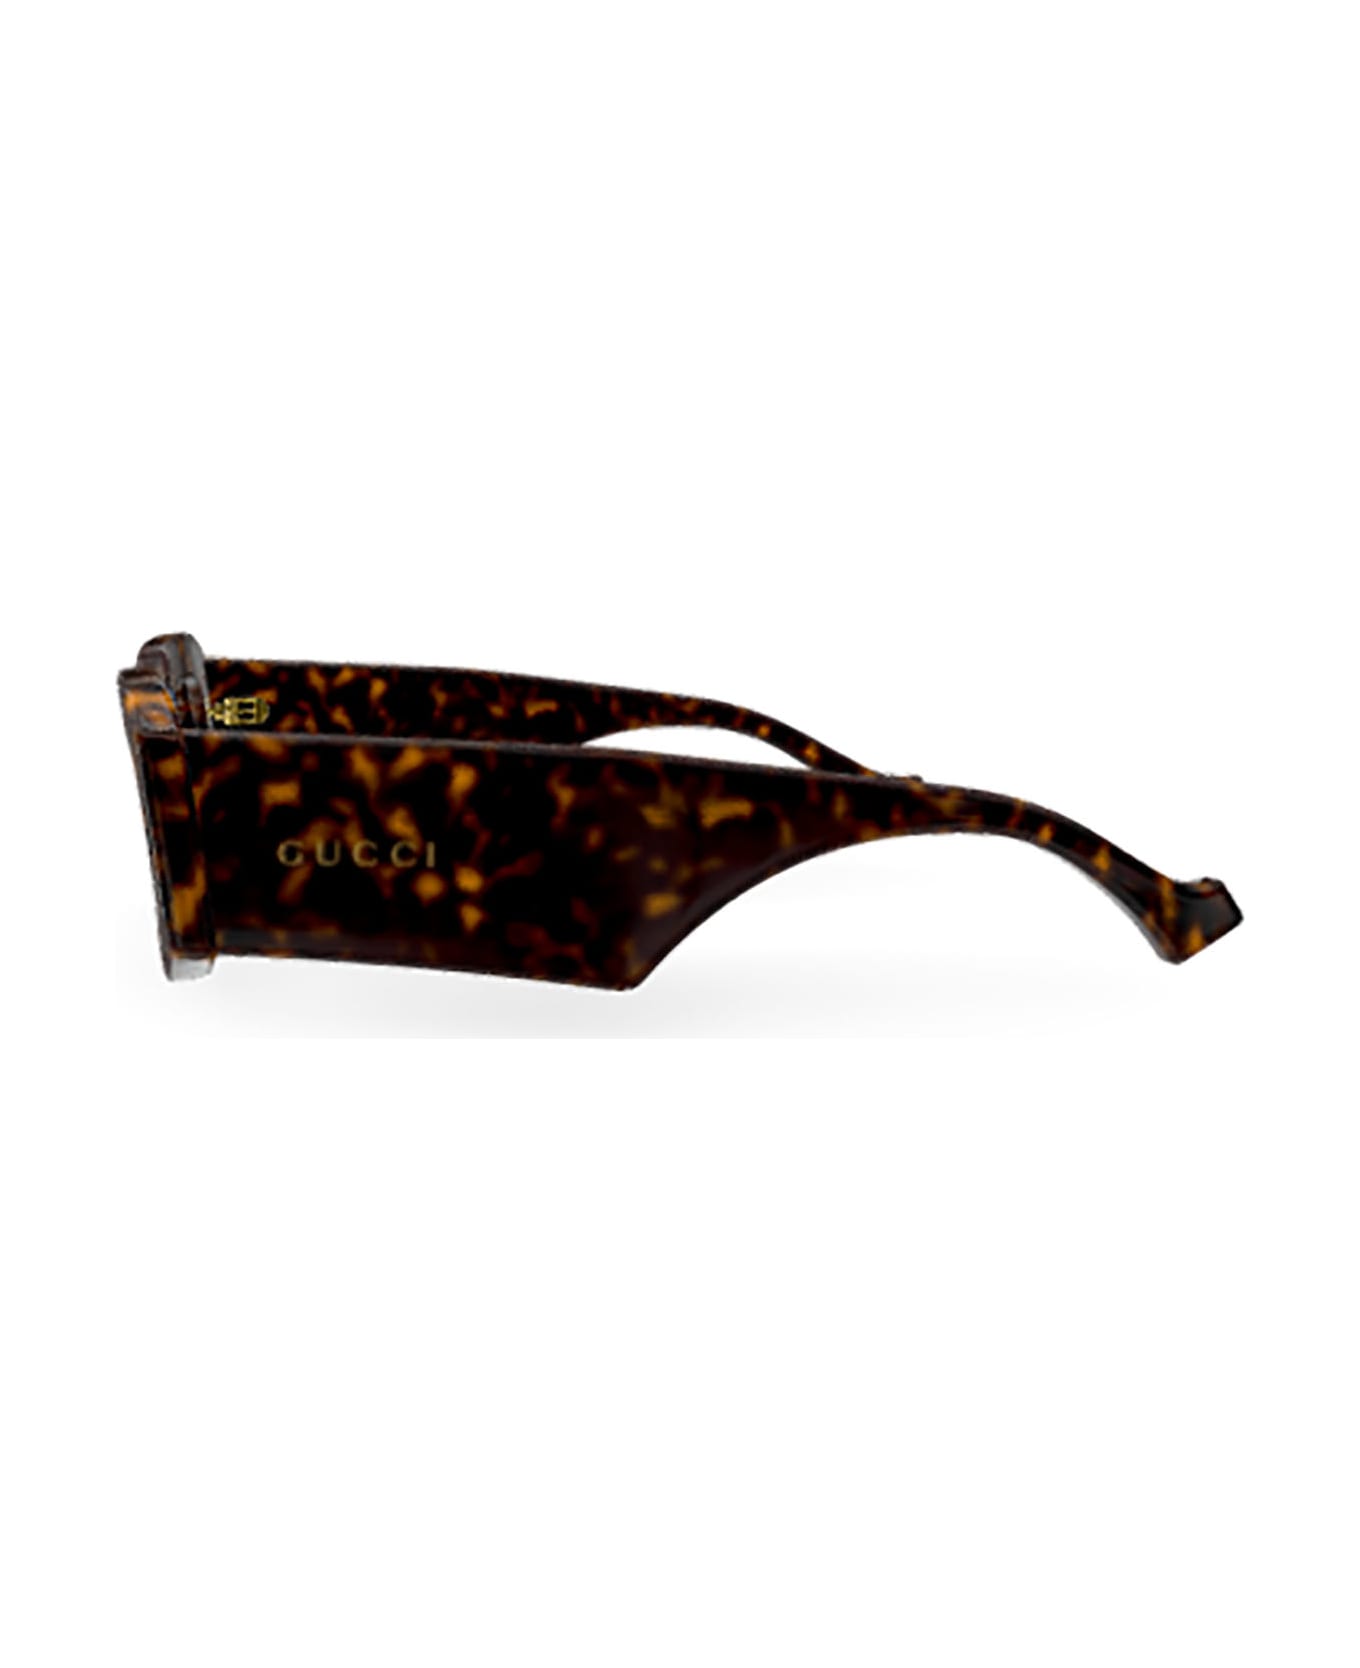 Gucci Eyewear Gg1426s Sunglasses - 002 havana havana brown